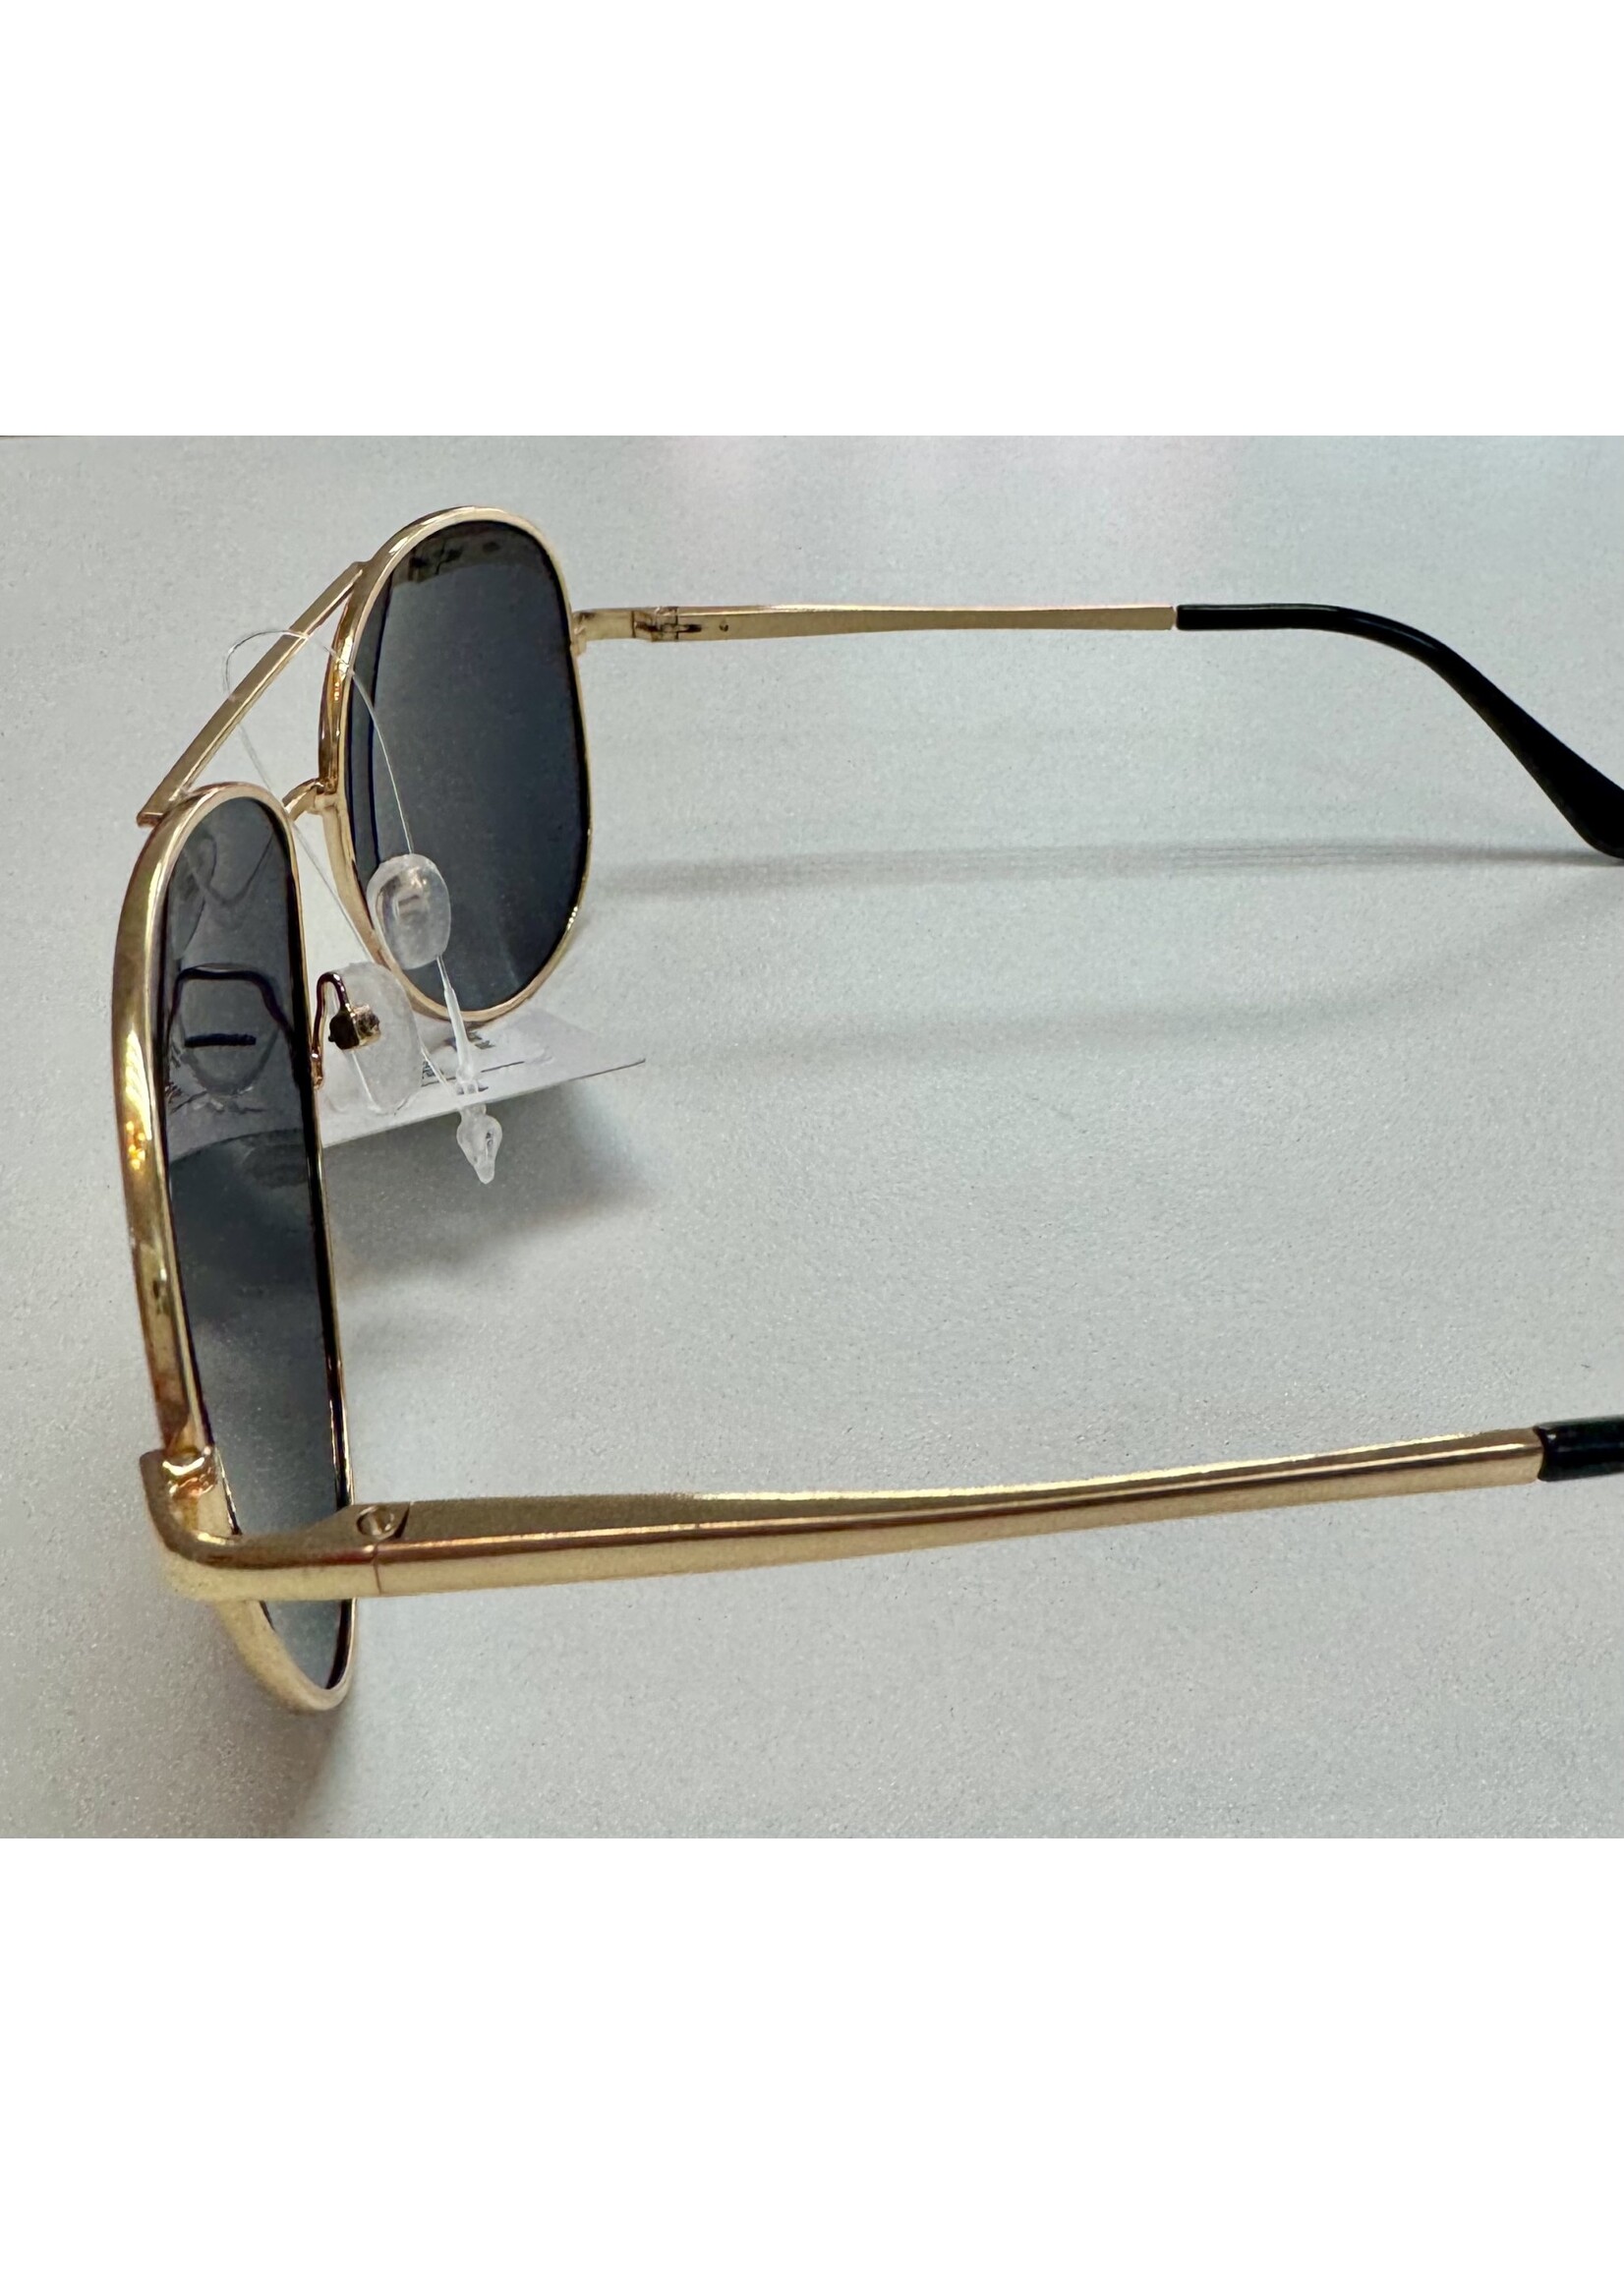 Aviator Gold Sunglasses